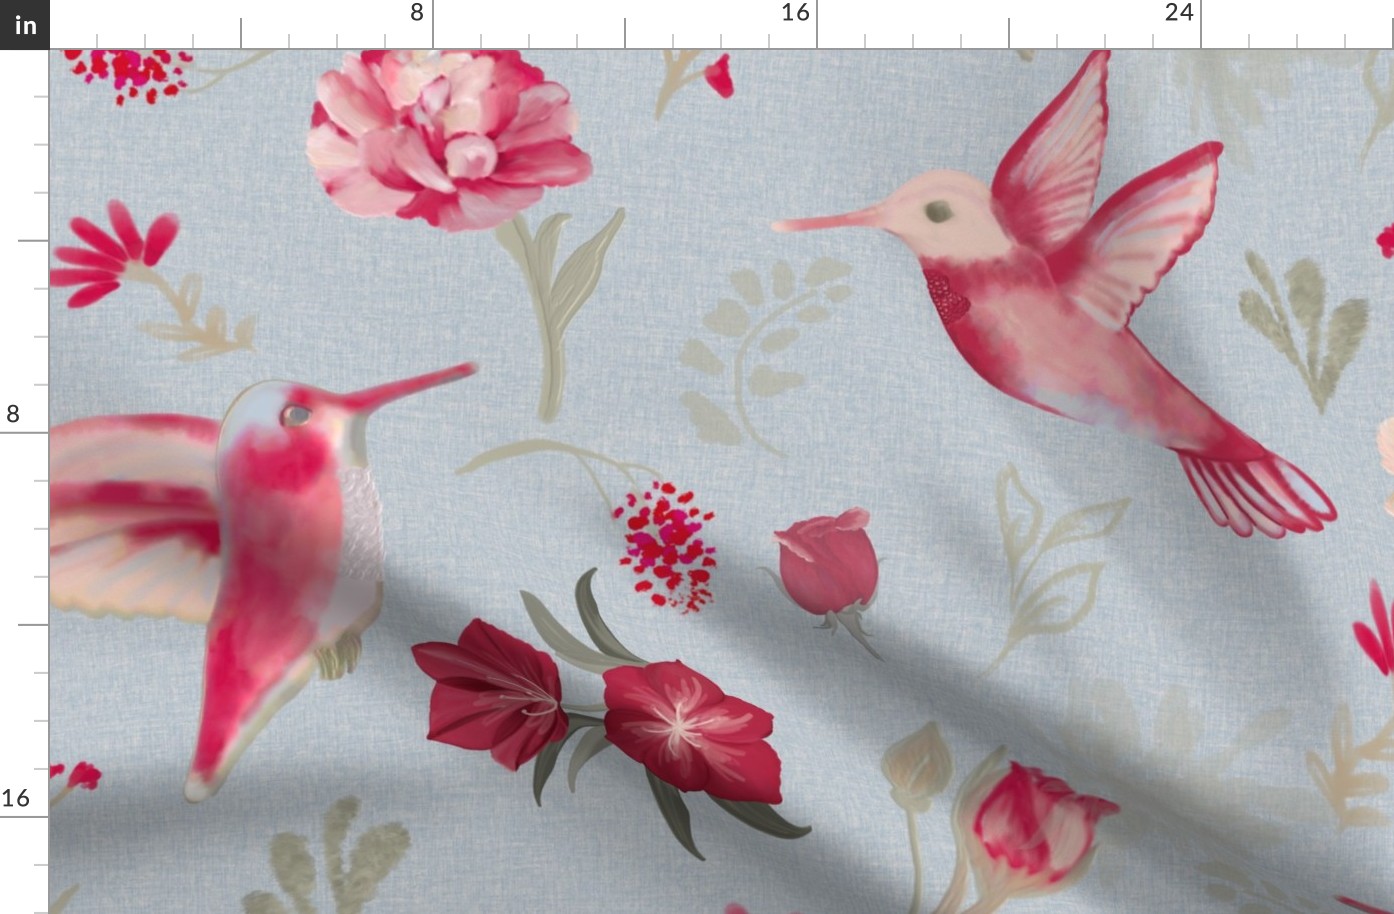 Hummingbirds, Plein Air, Blue, pantonevivamagentadc, magenta, pink, flowers, floral, birds, JG Anchor Designs